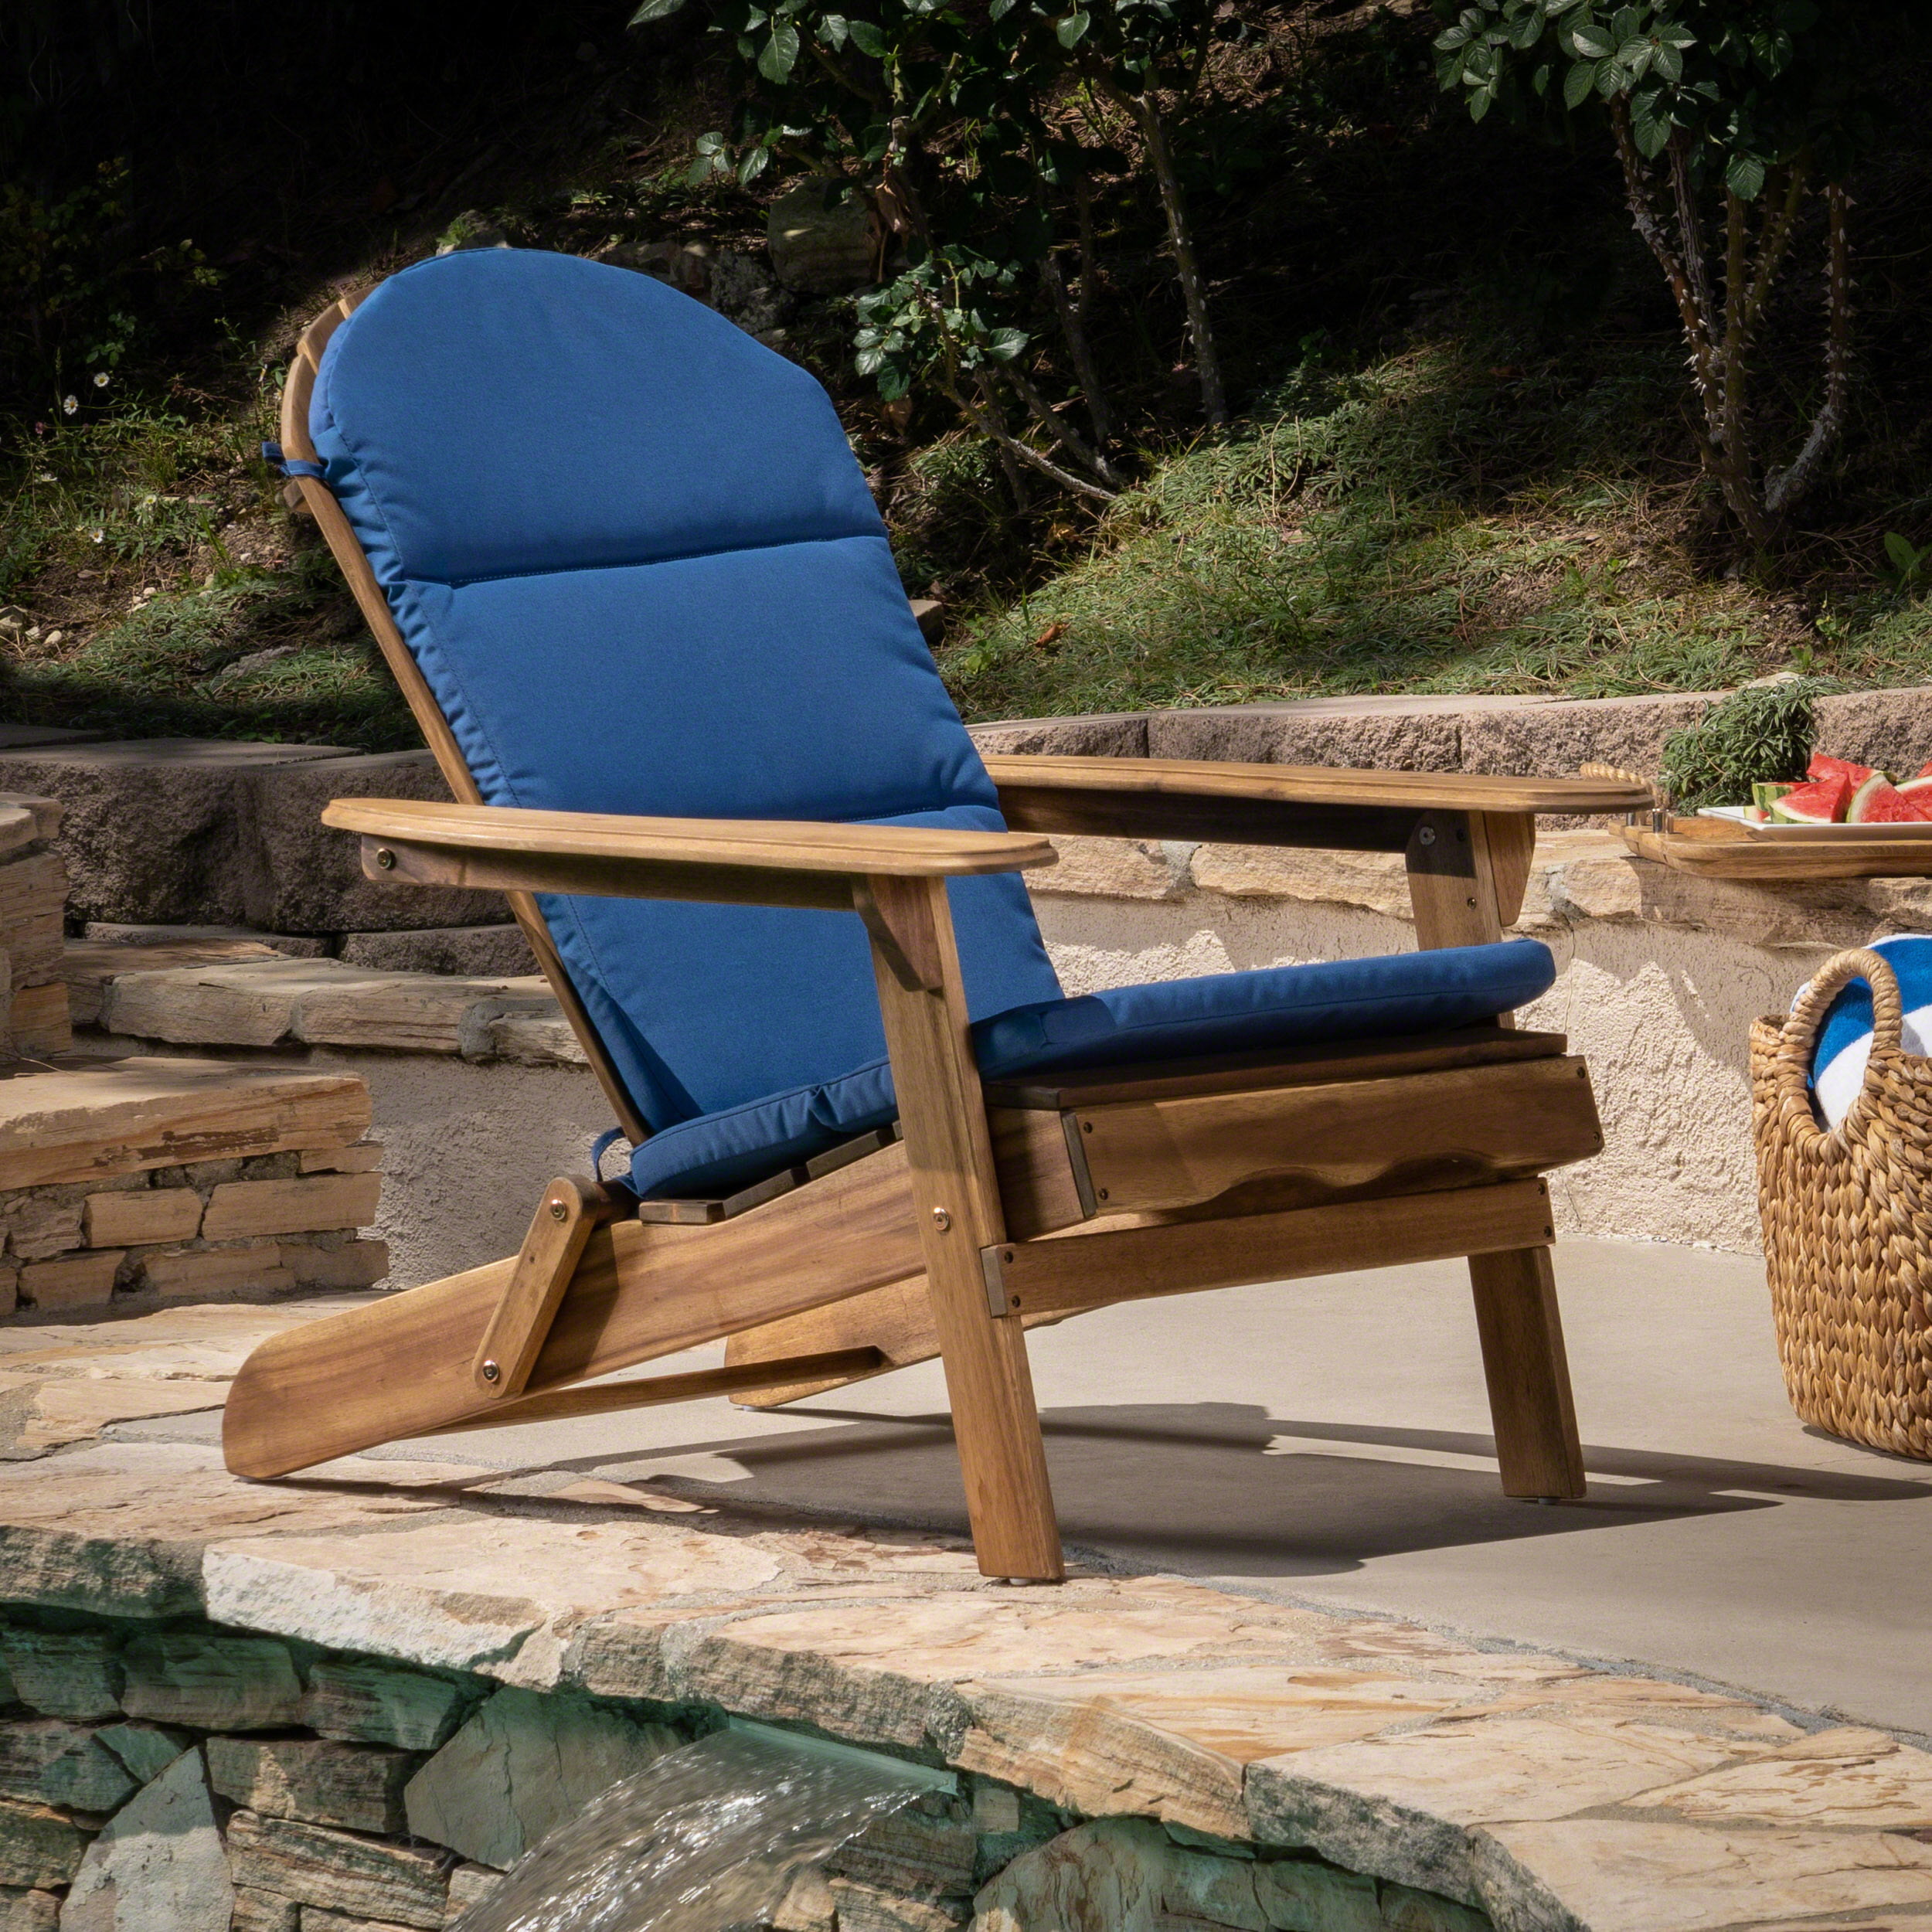 Ariel Outdoor Adirondack Chair Cushion, Navy Blue - Walmart.com